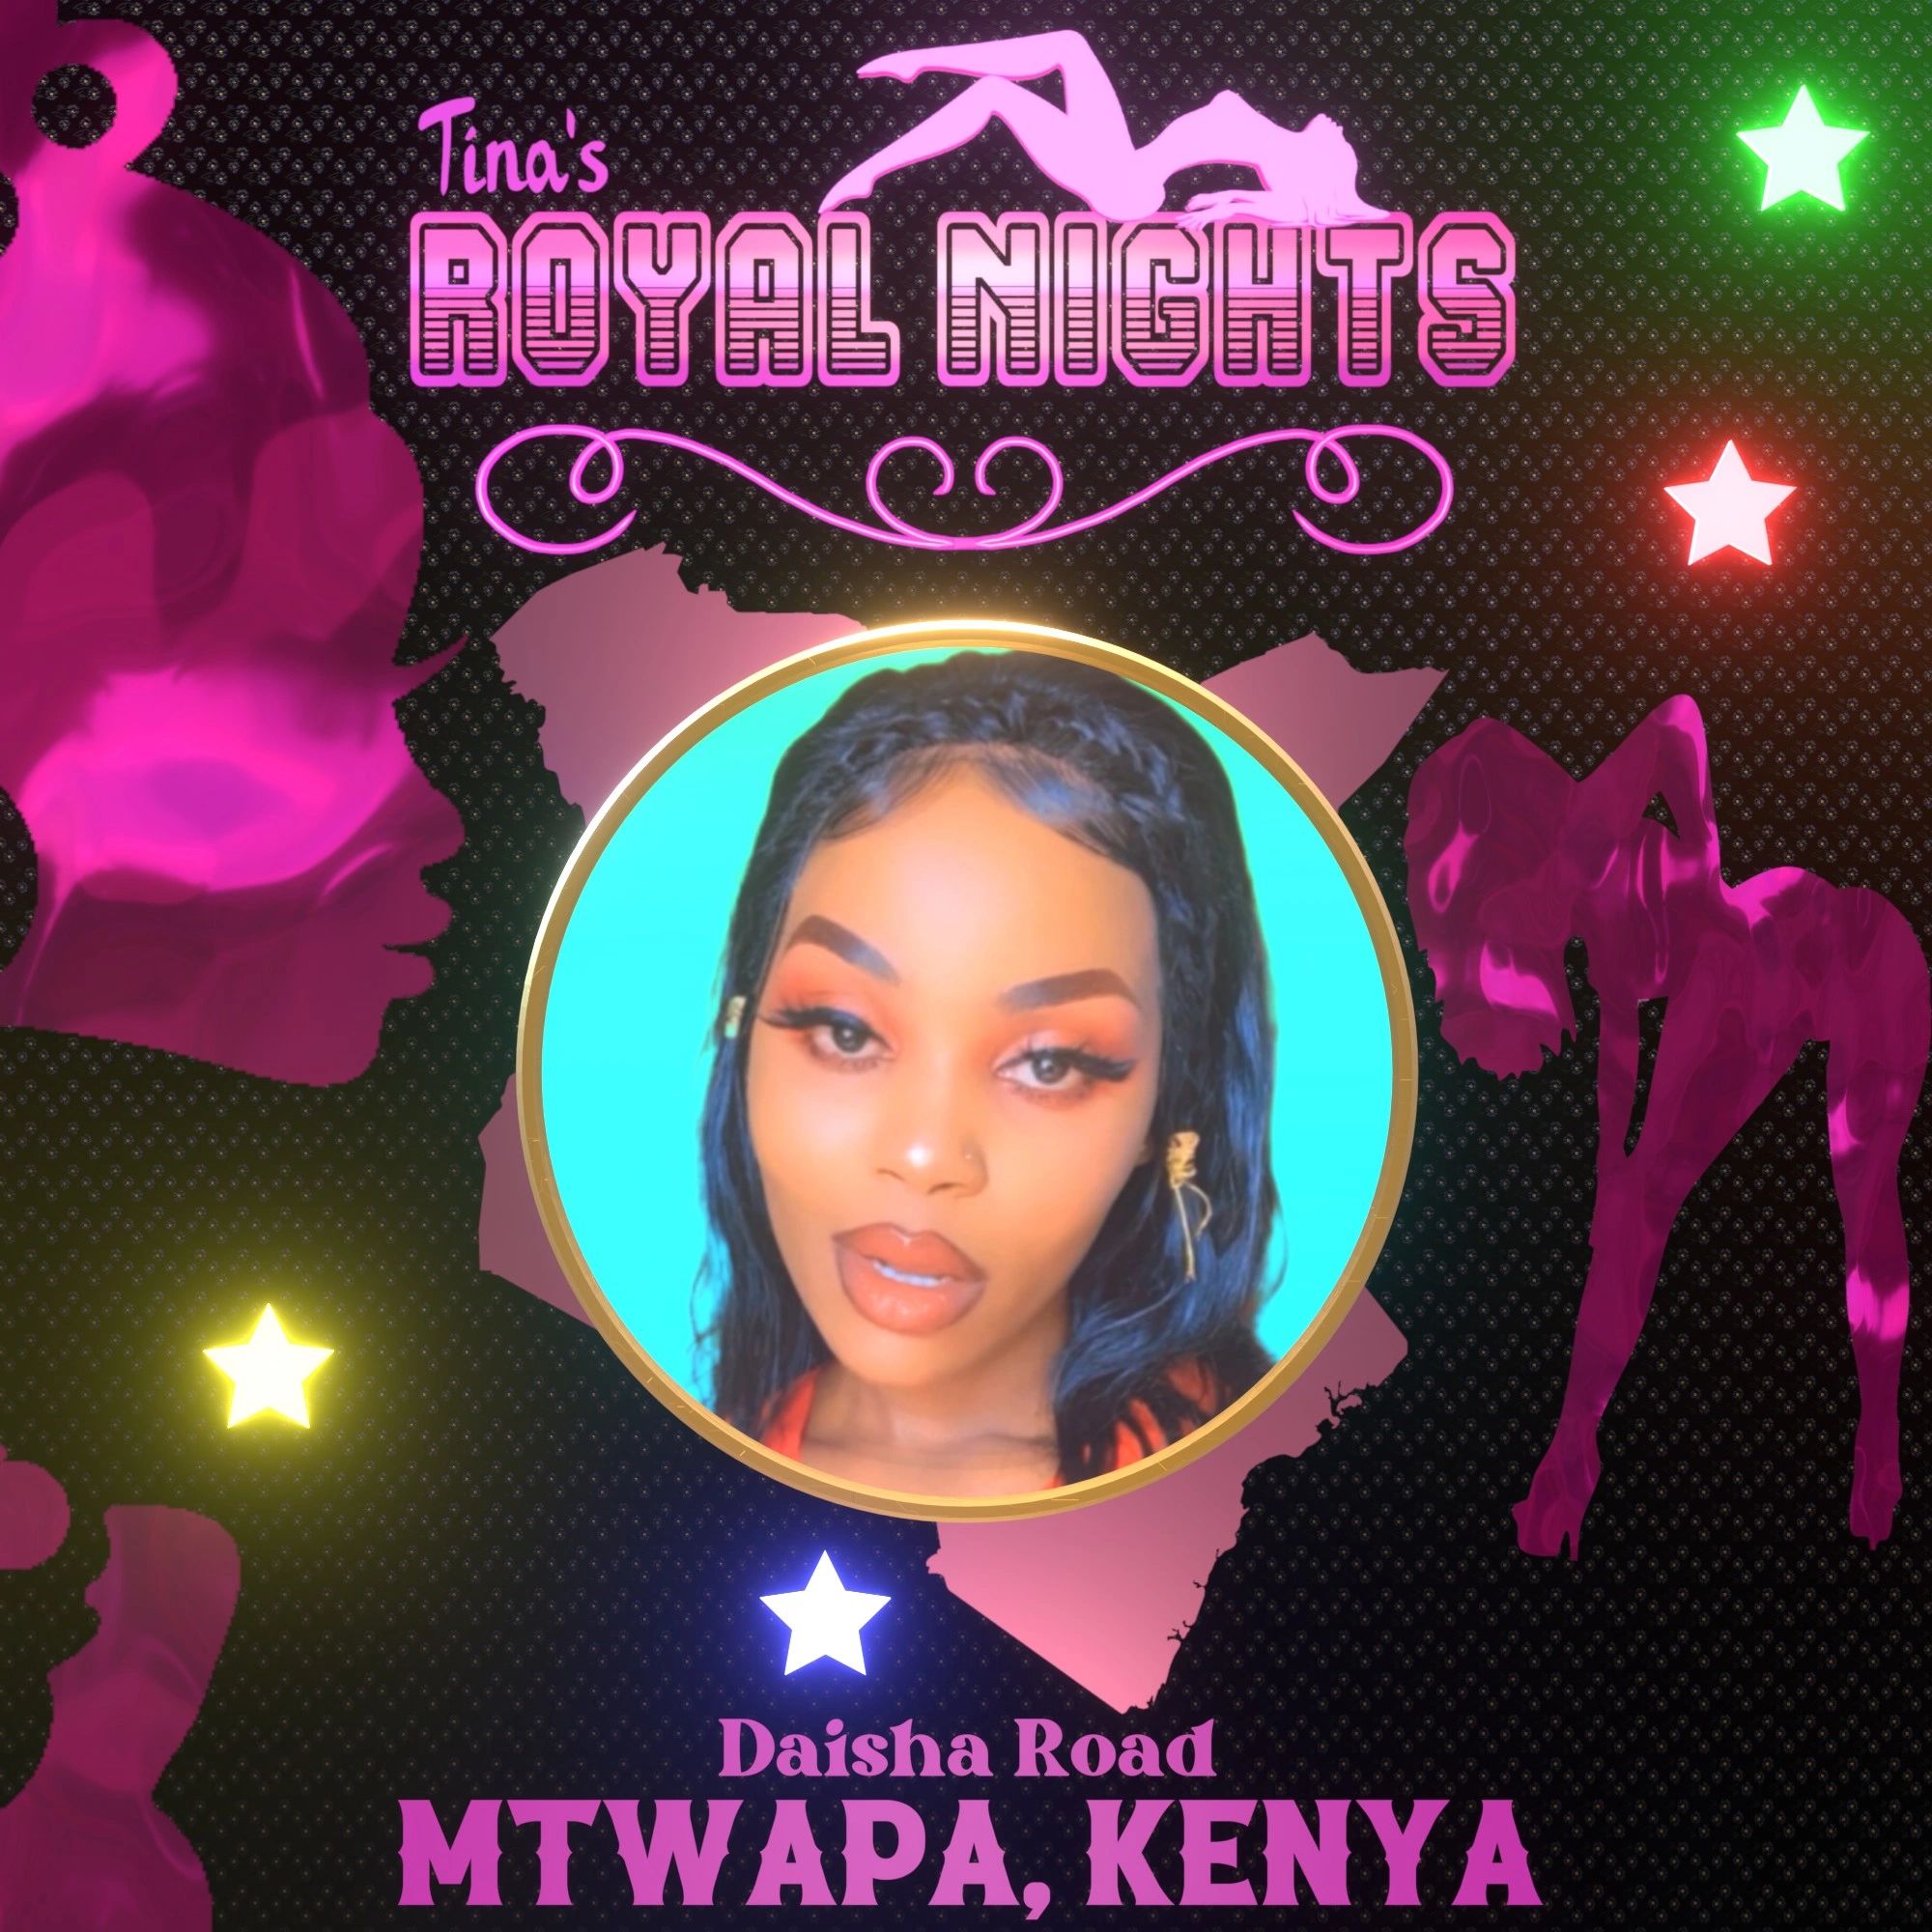 Promotional artwork NFT ad for Tina's Royal Nights club located in Mtwapa, Mombasa, Kenya.